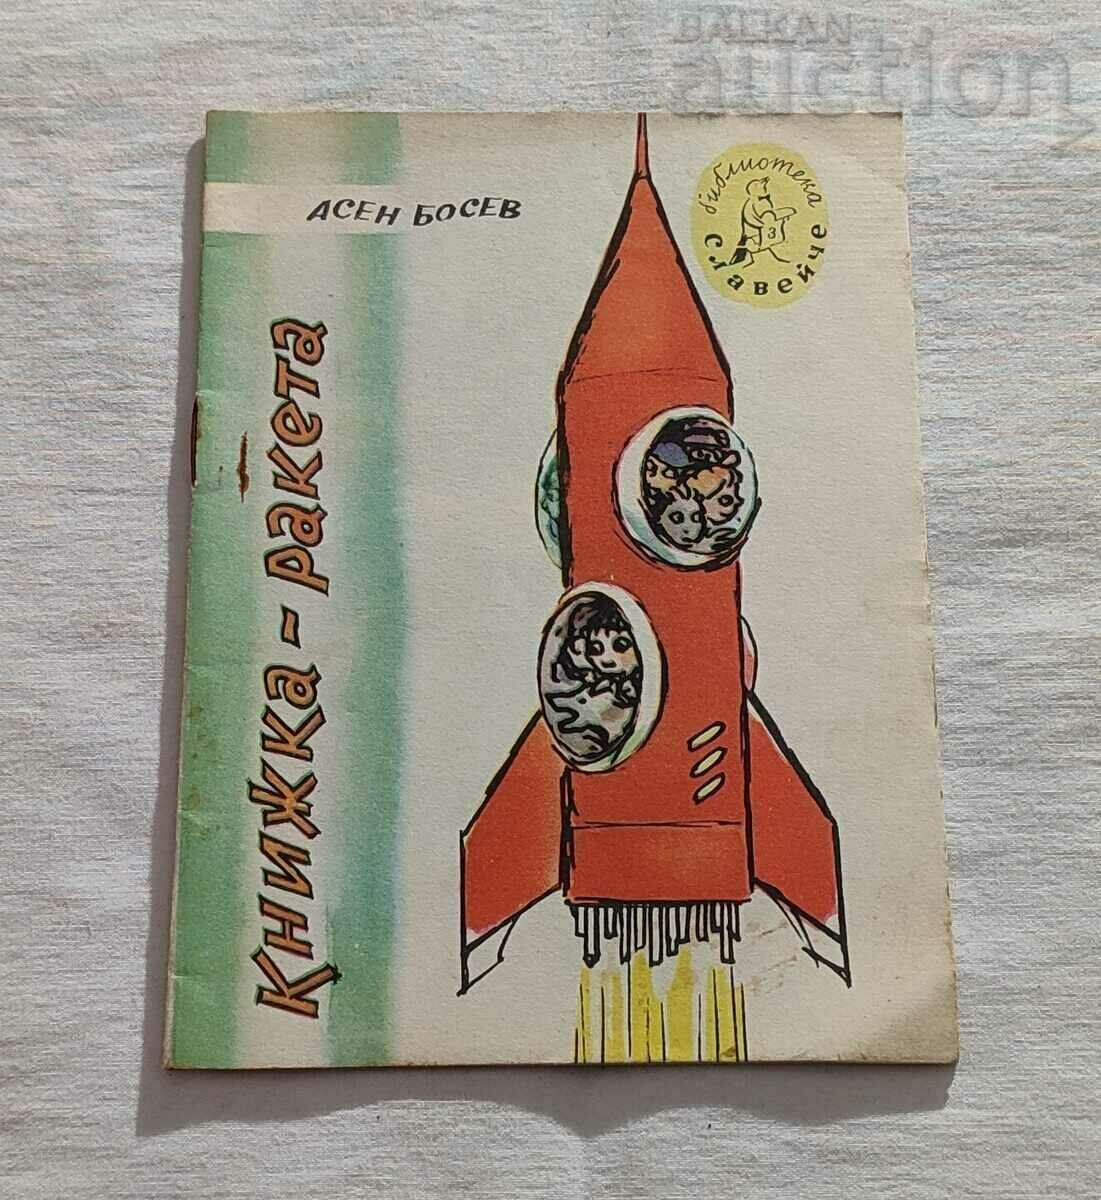 ASEN BOSEV ROCKET BOOK 1960